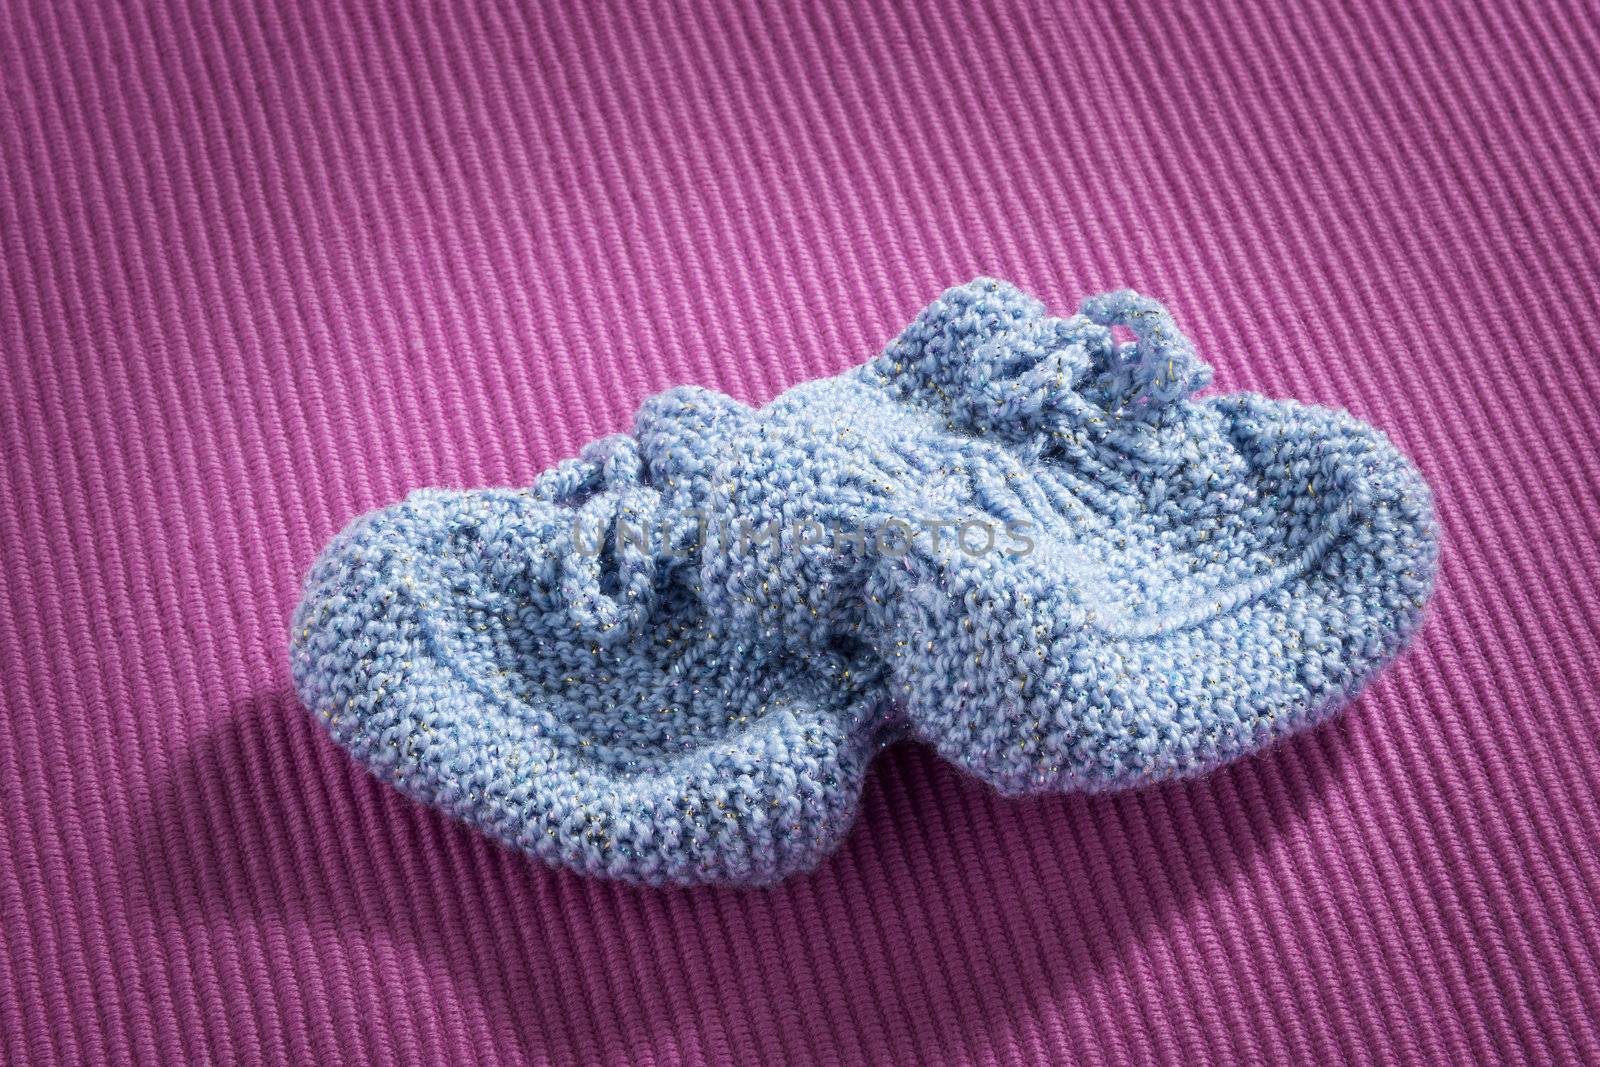 Blue baby socks by w20er